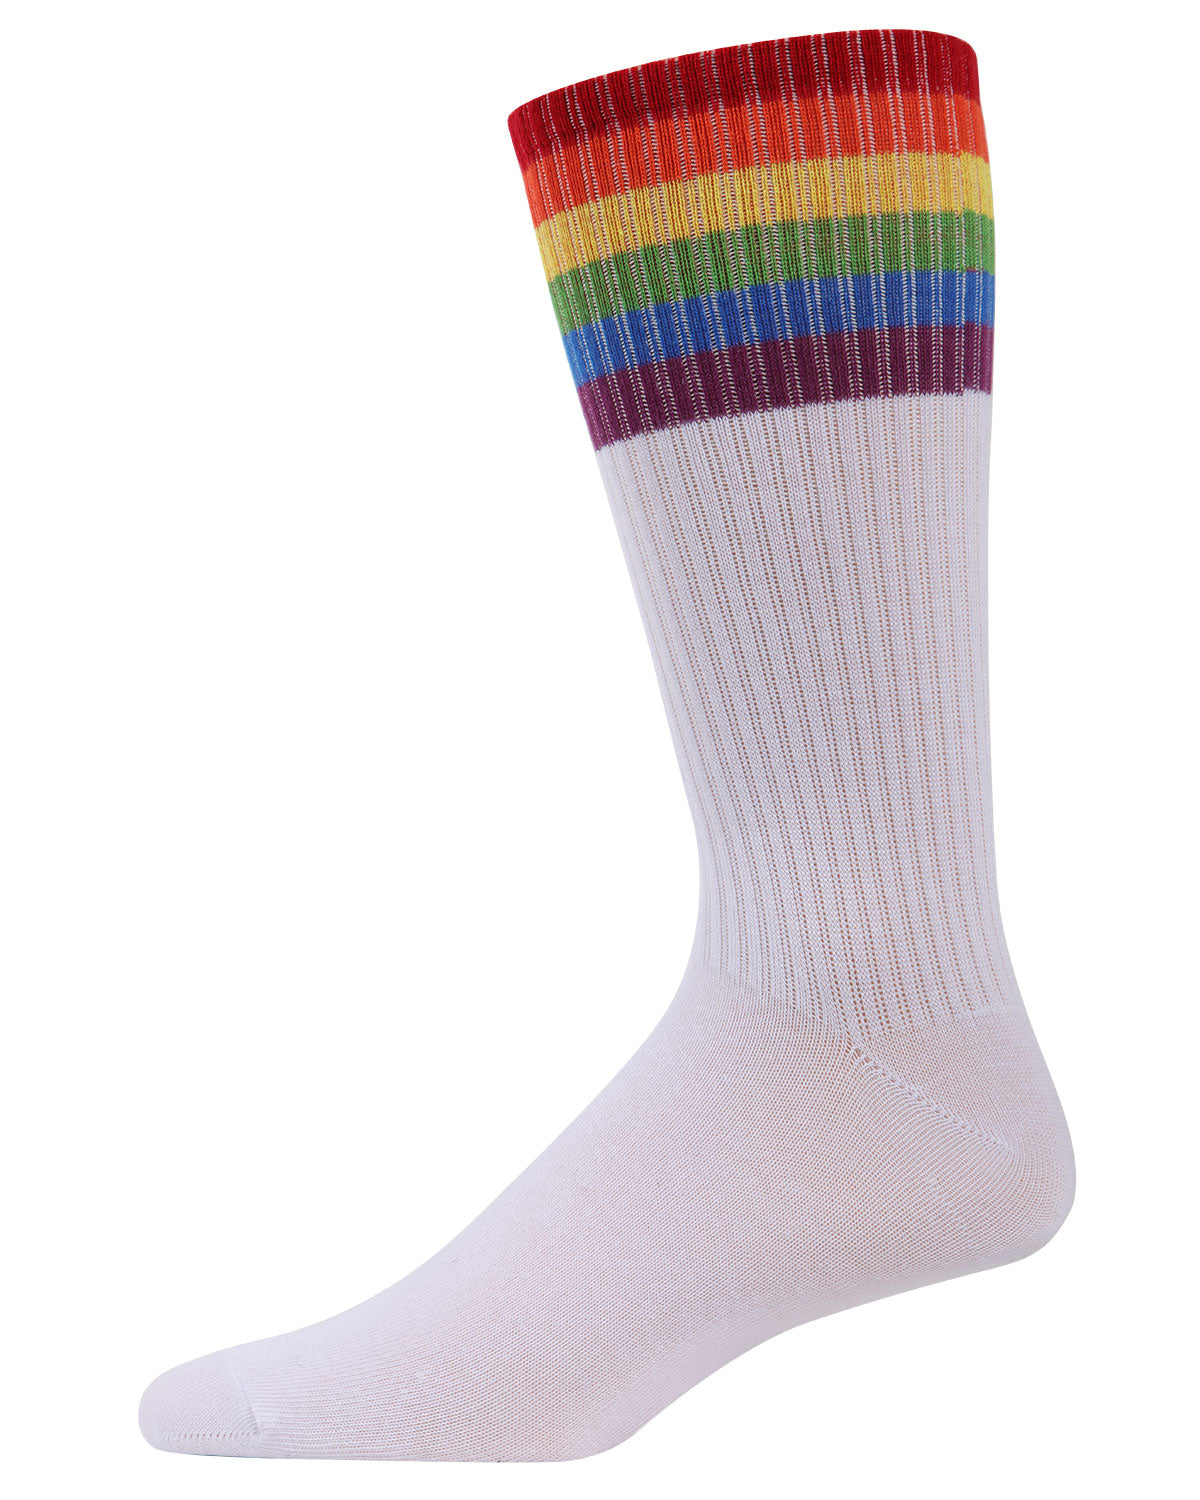 Rainbow Socks for Men  Colorful Striped Pride Socks - Cute But Crazy Socks